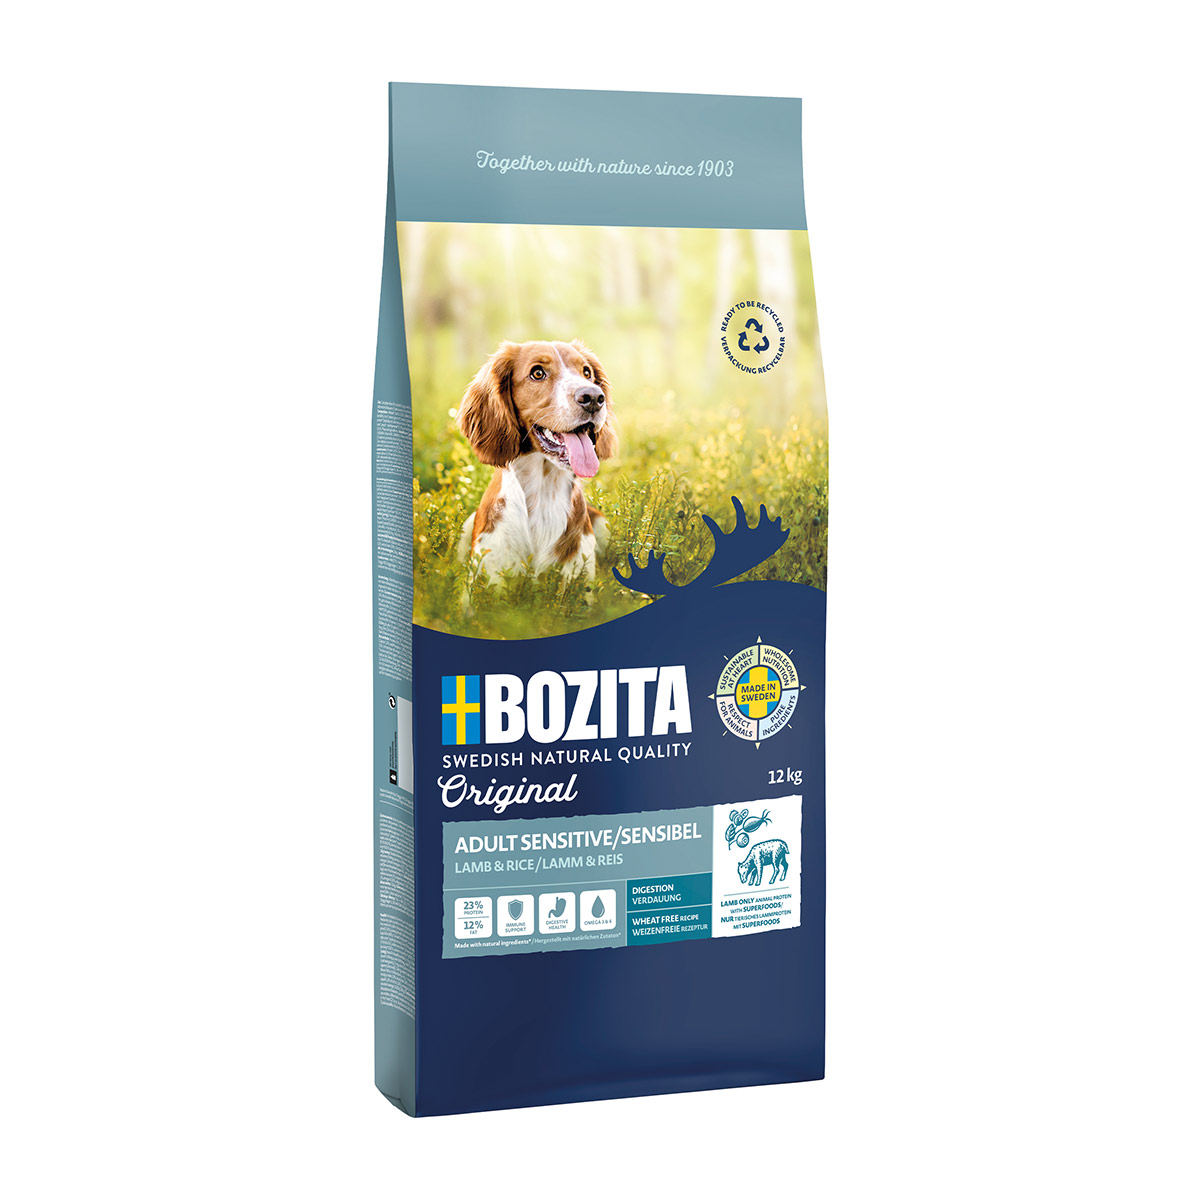 Bozita Original Adult Sensitive Digestion mit Lamm 12kg von Bozita